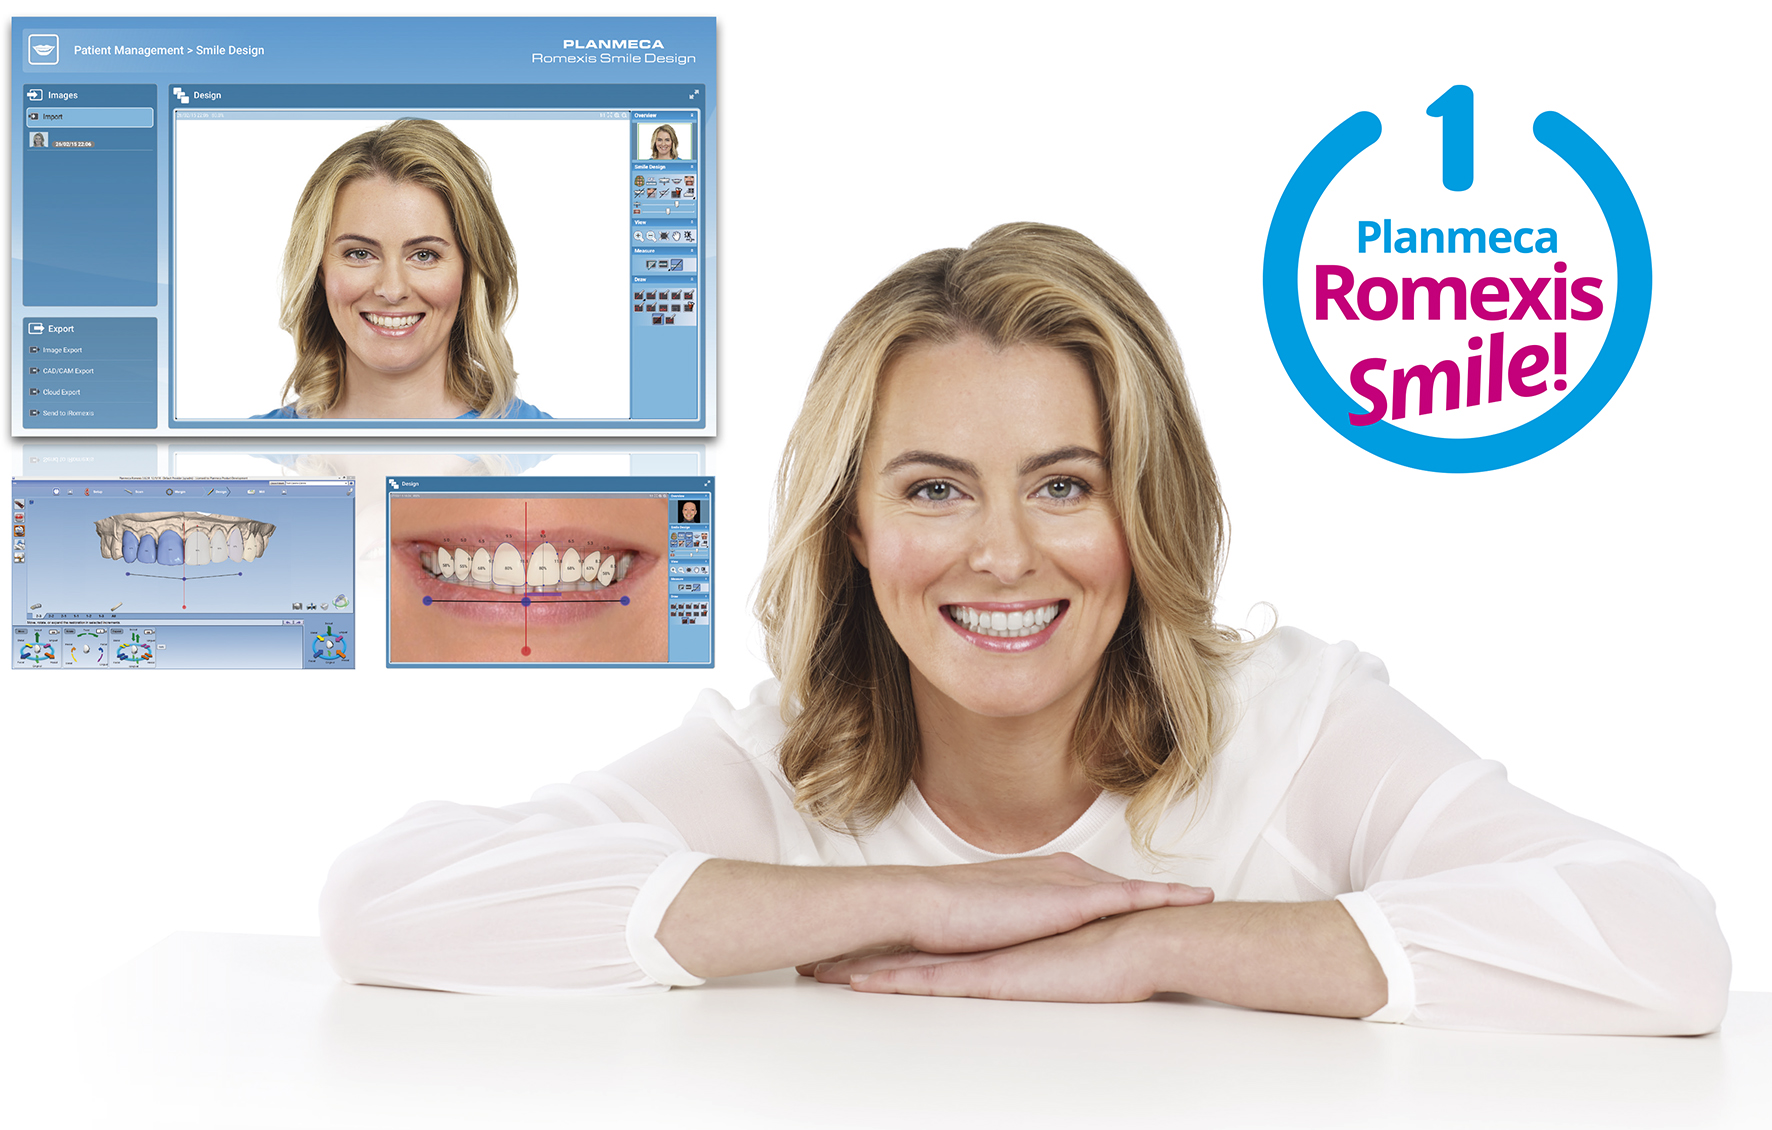 Planmeca Romexis® Smile Design allows dentists to create harmonious new smiles for patients